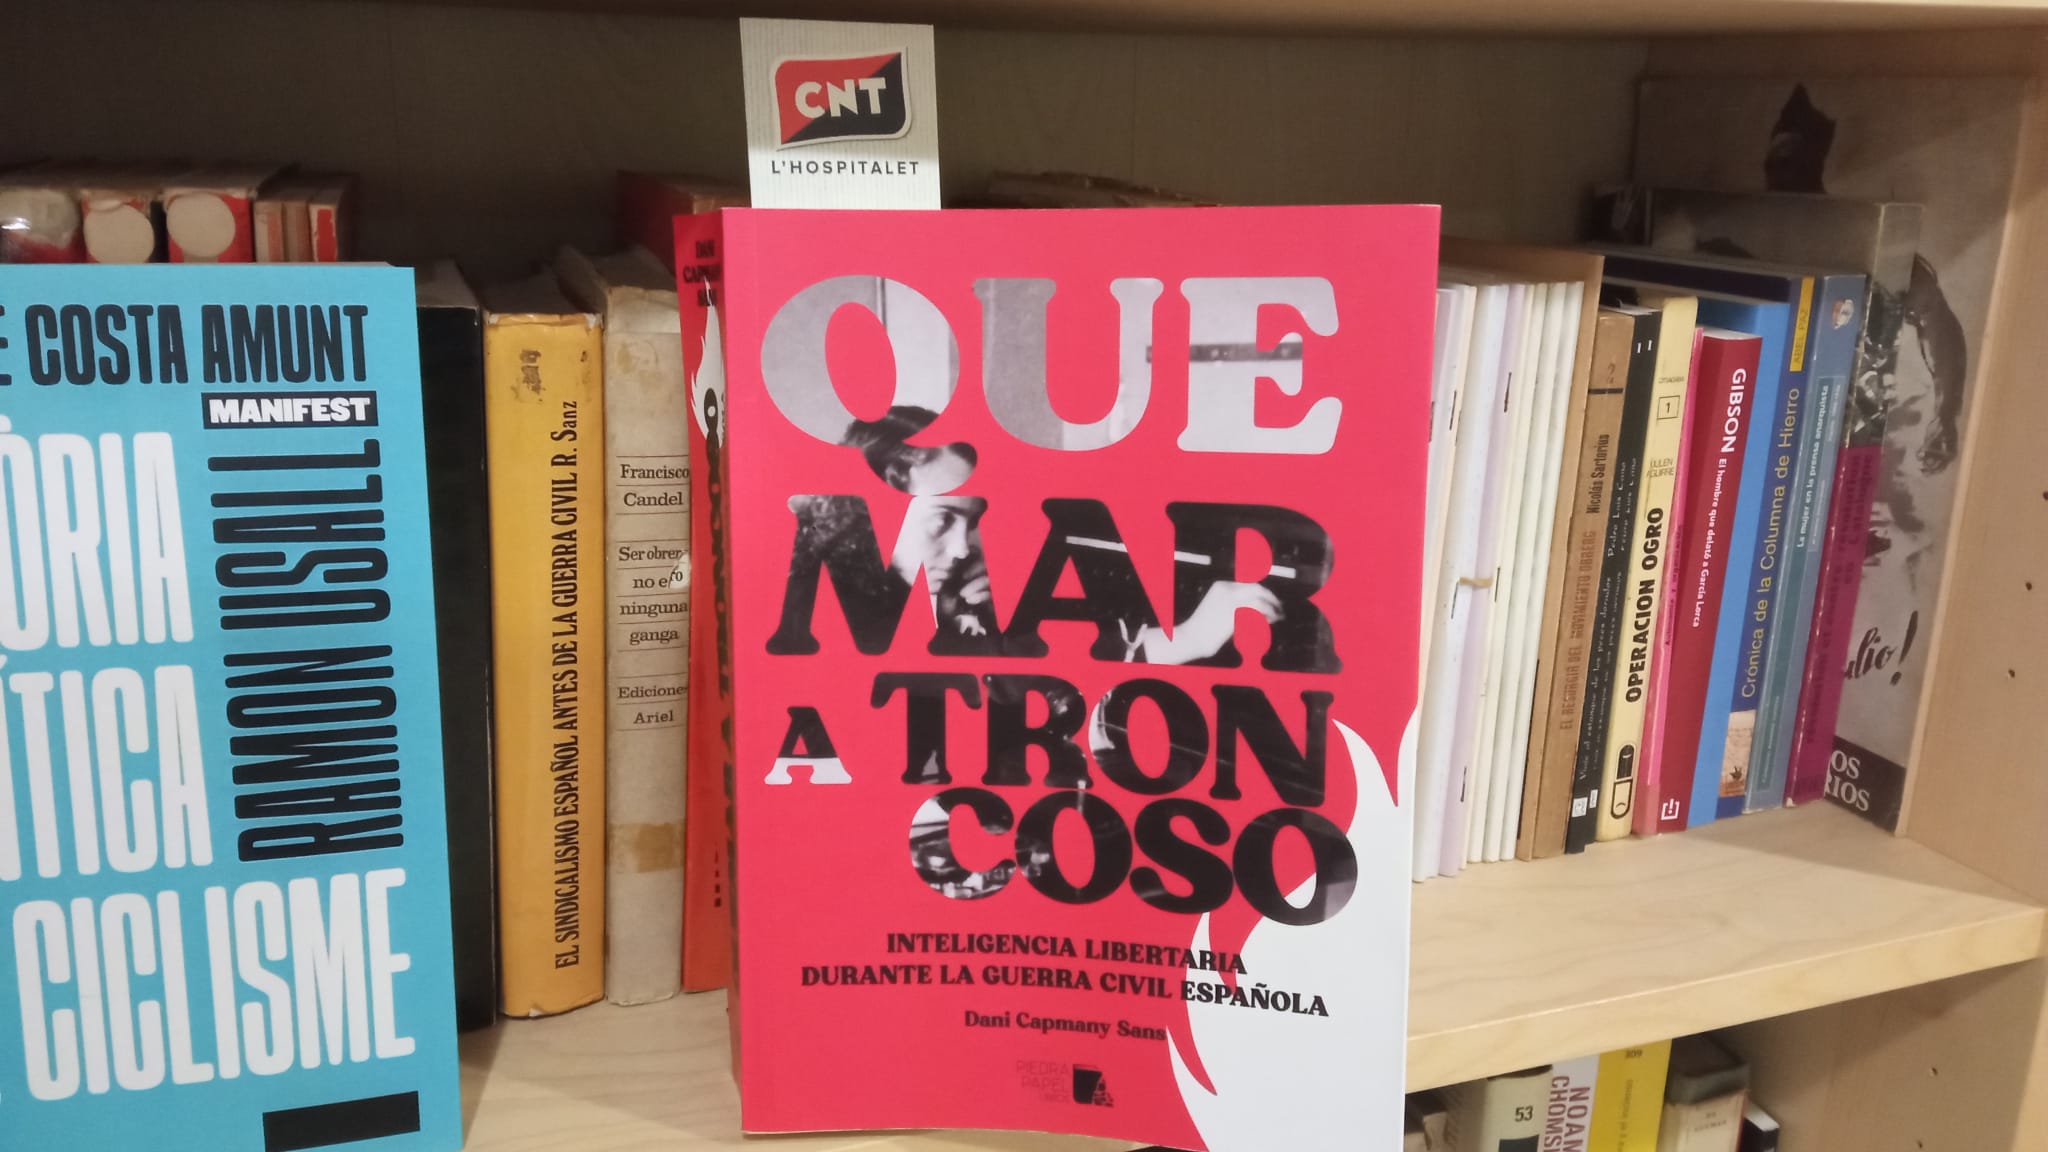 Quemar a Troncoso, inteligencia libertaria durante la guerra civil española